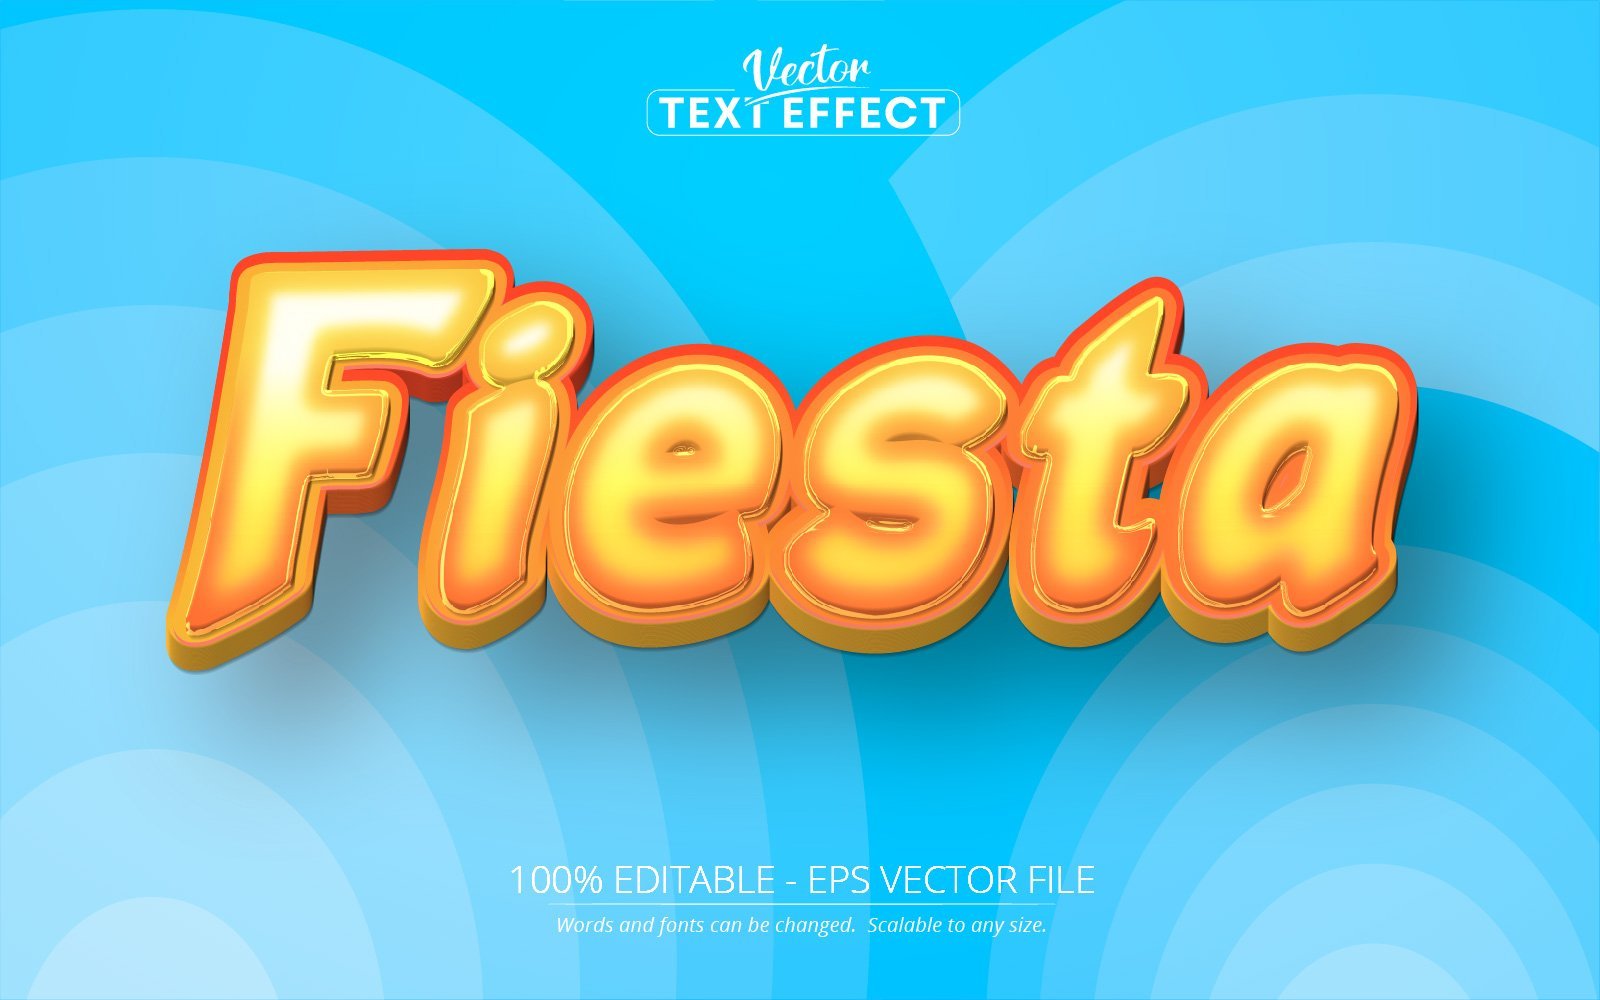 Fiesta - Editable Text Effect, Orange And Blue Cartoon Text Style, Graphics Illustration